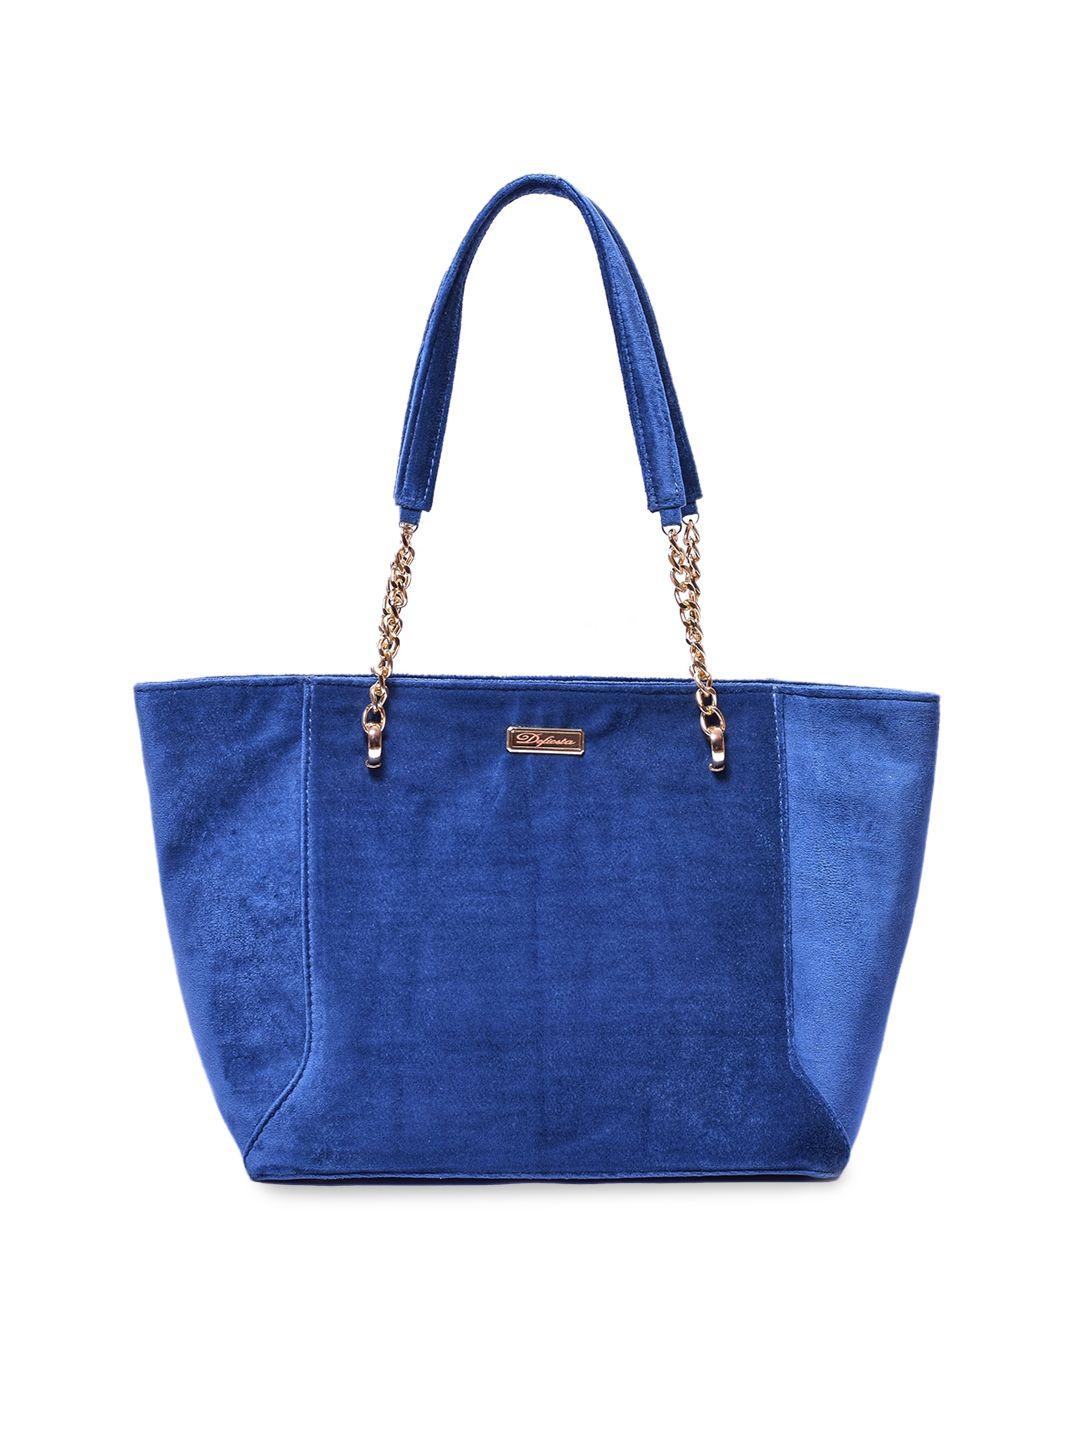 defiesta blue shopper shoulder bag with quilted